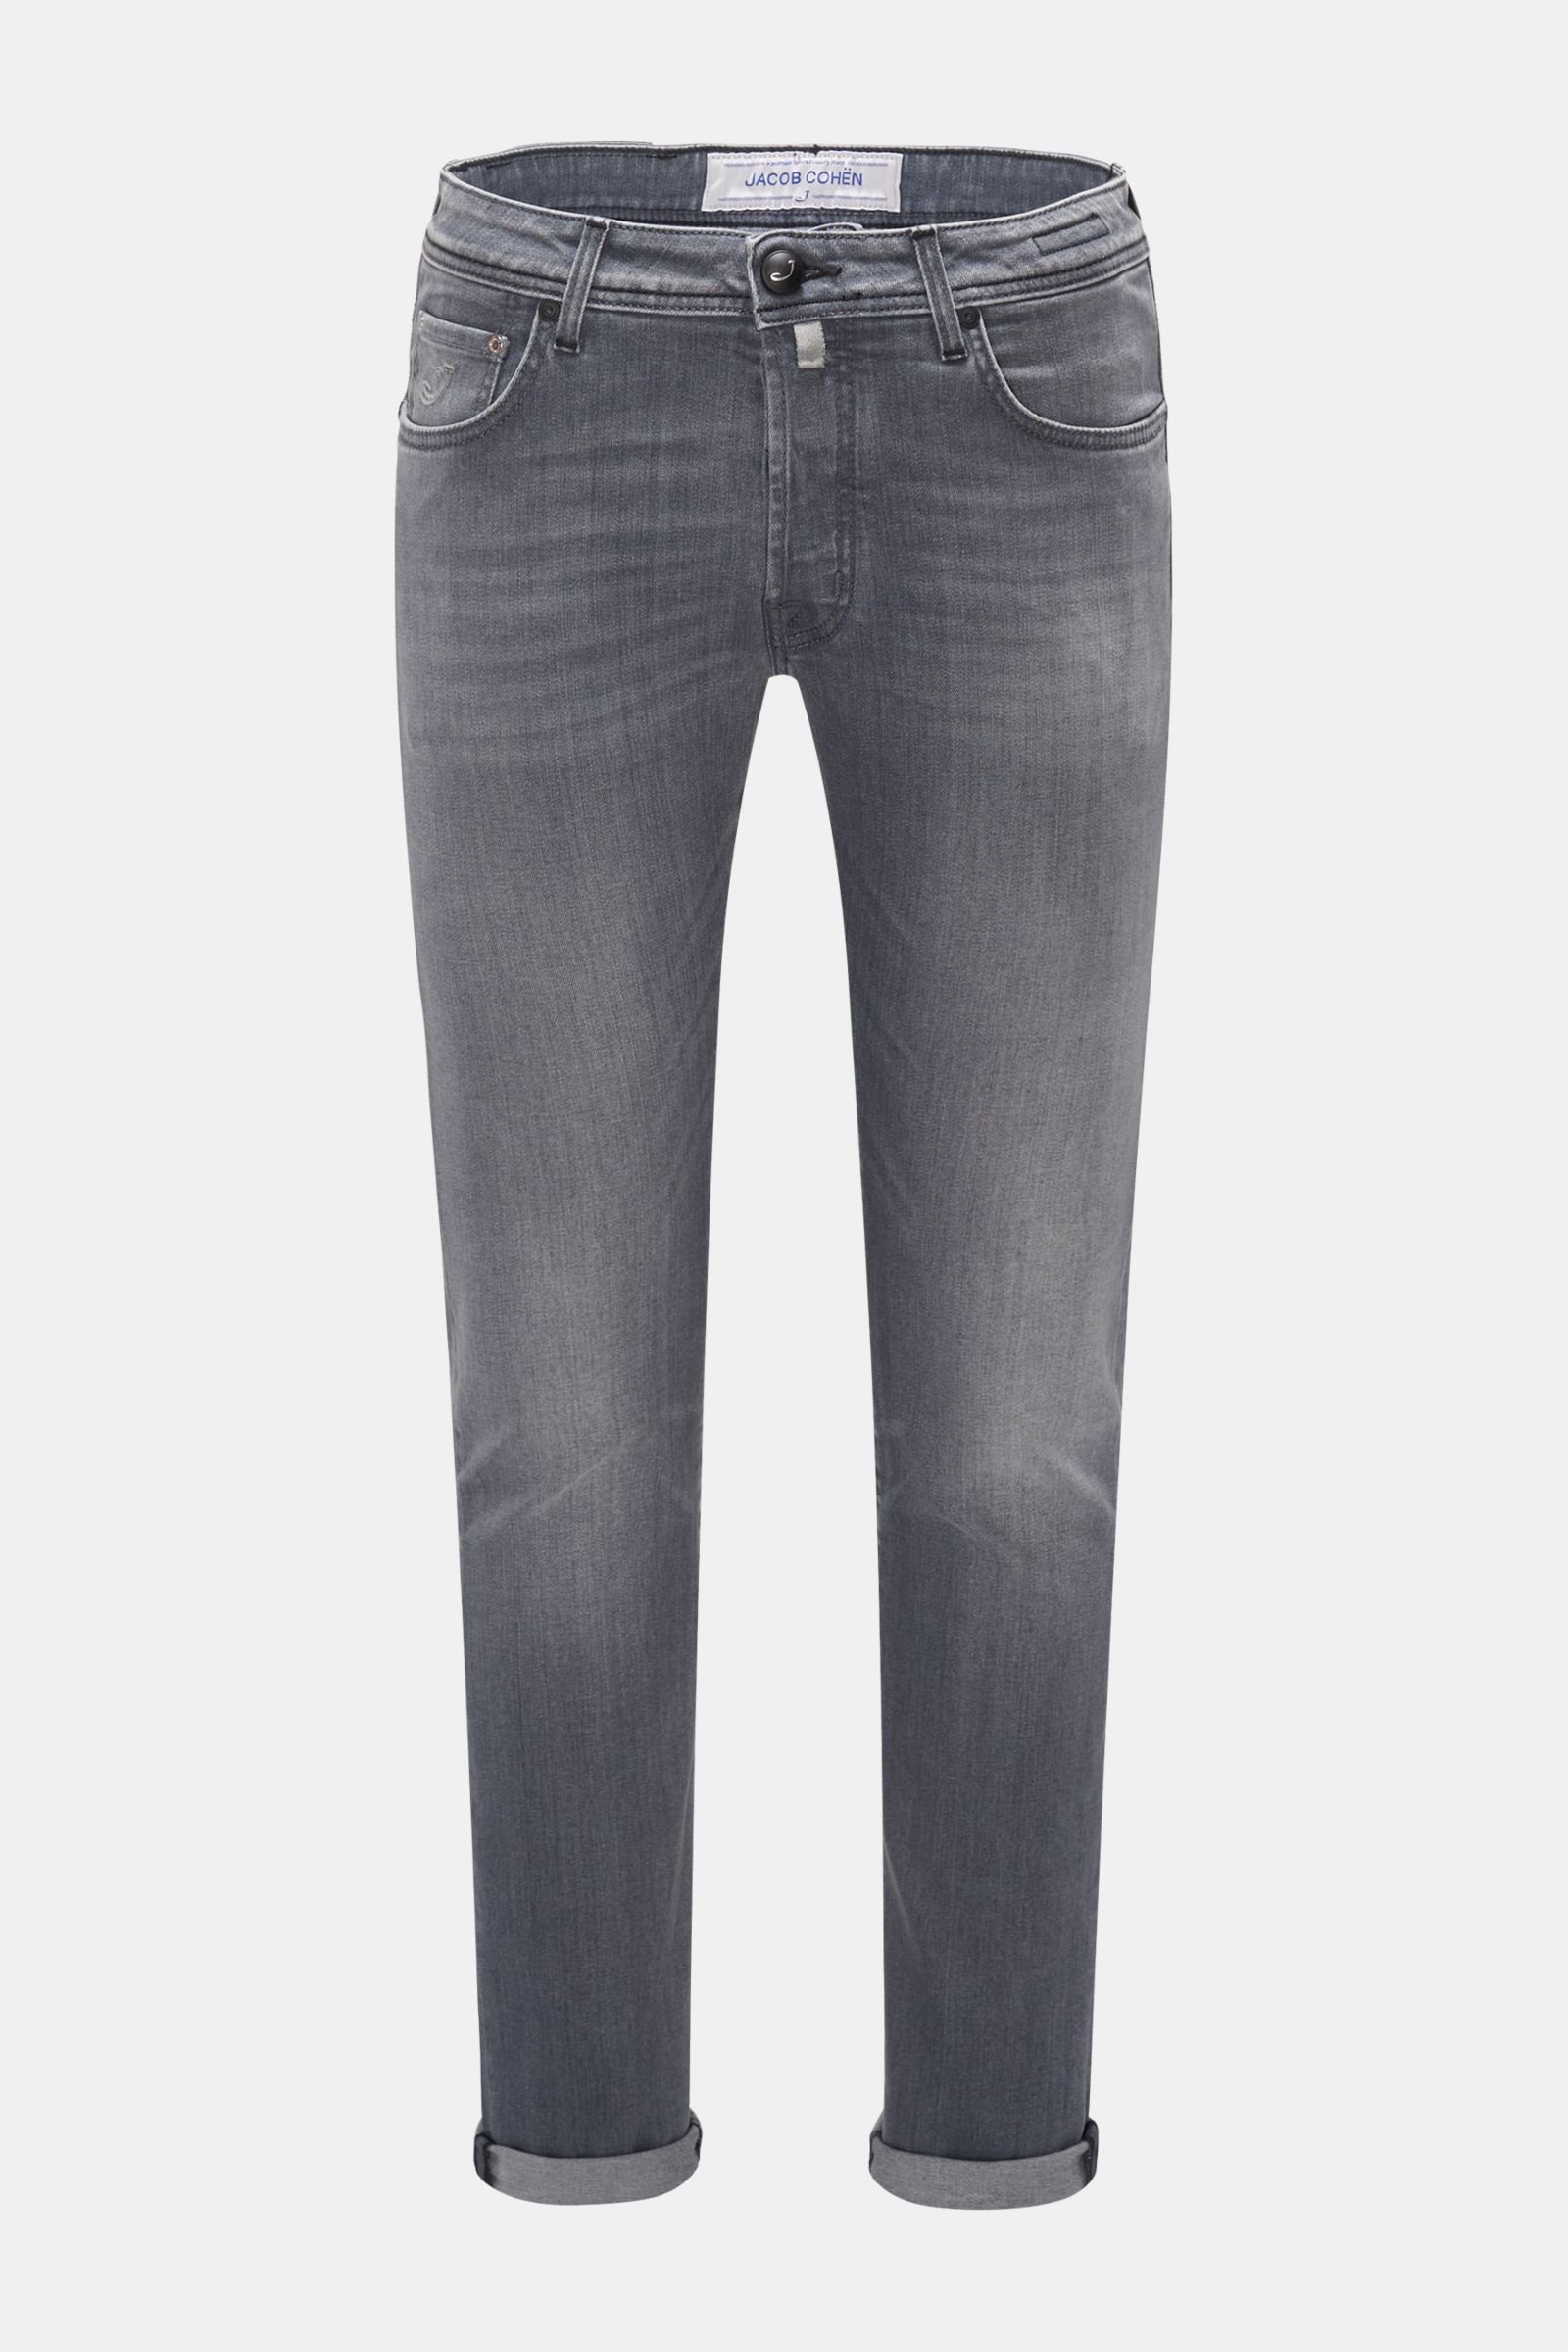 Jeans 'J688 Comfort Slim Fit' grau